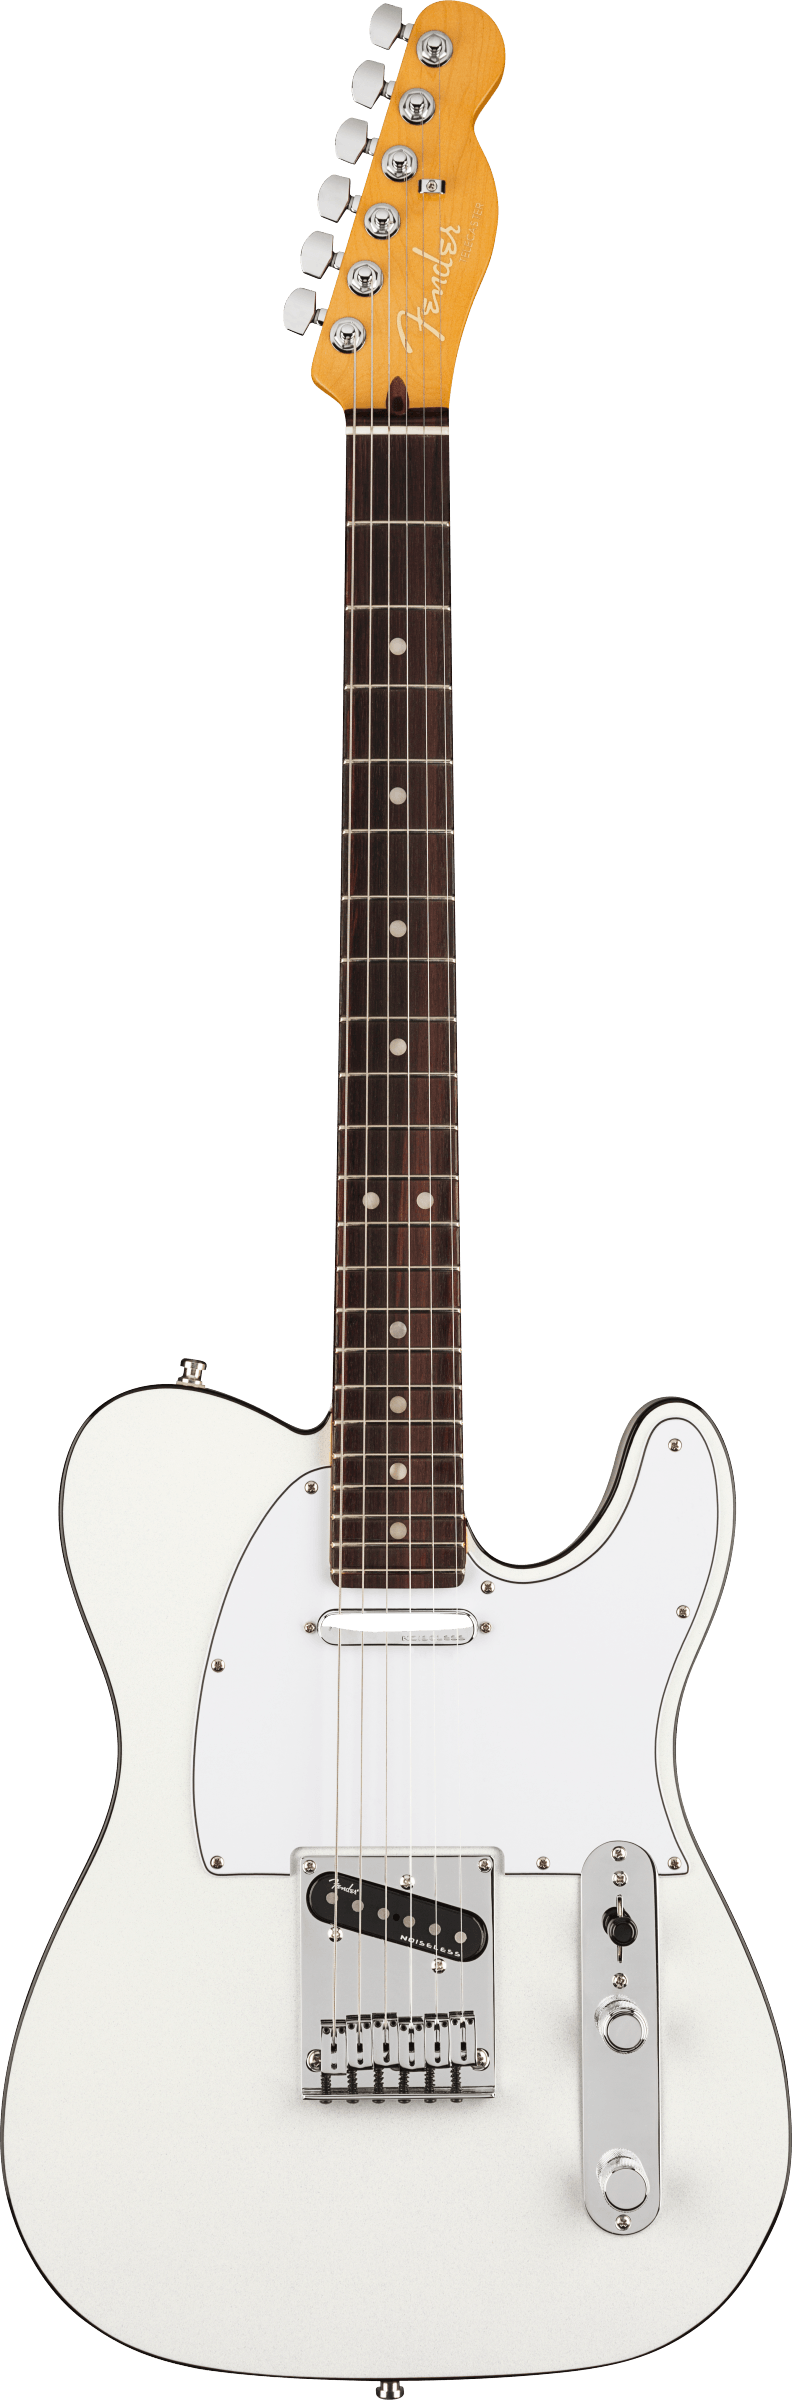 Fender Telecaster RW electric guitar in Arctic Pearl white Tone Shop Guitars Dallas Fort Worth